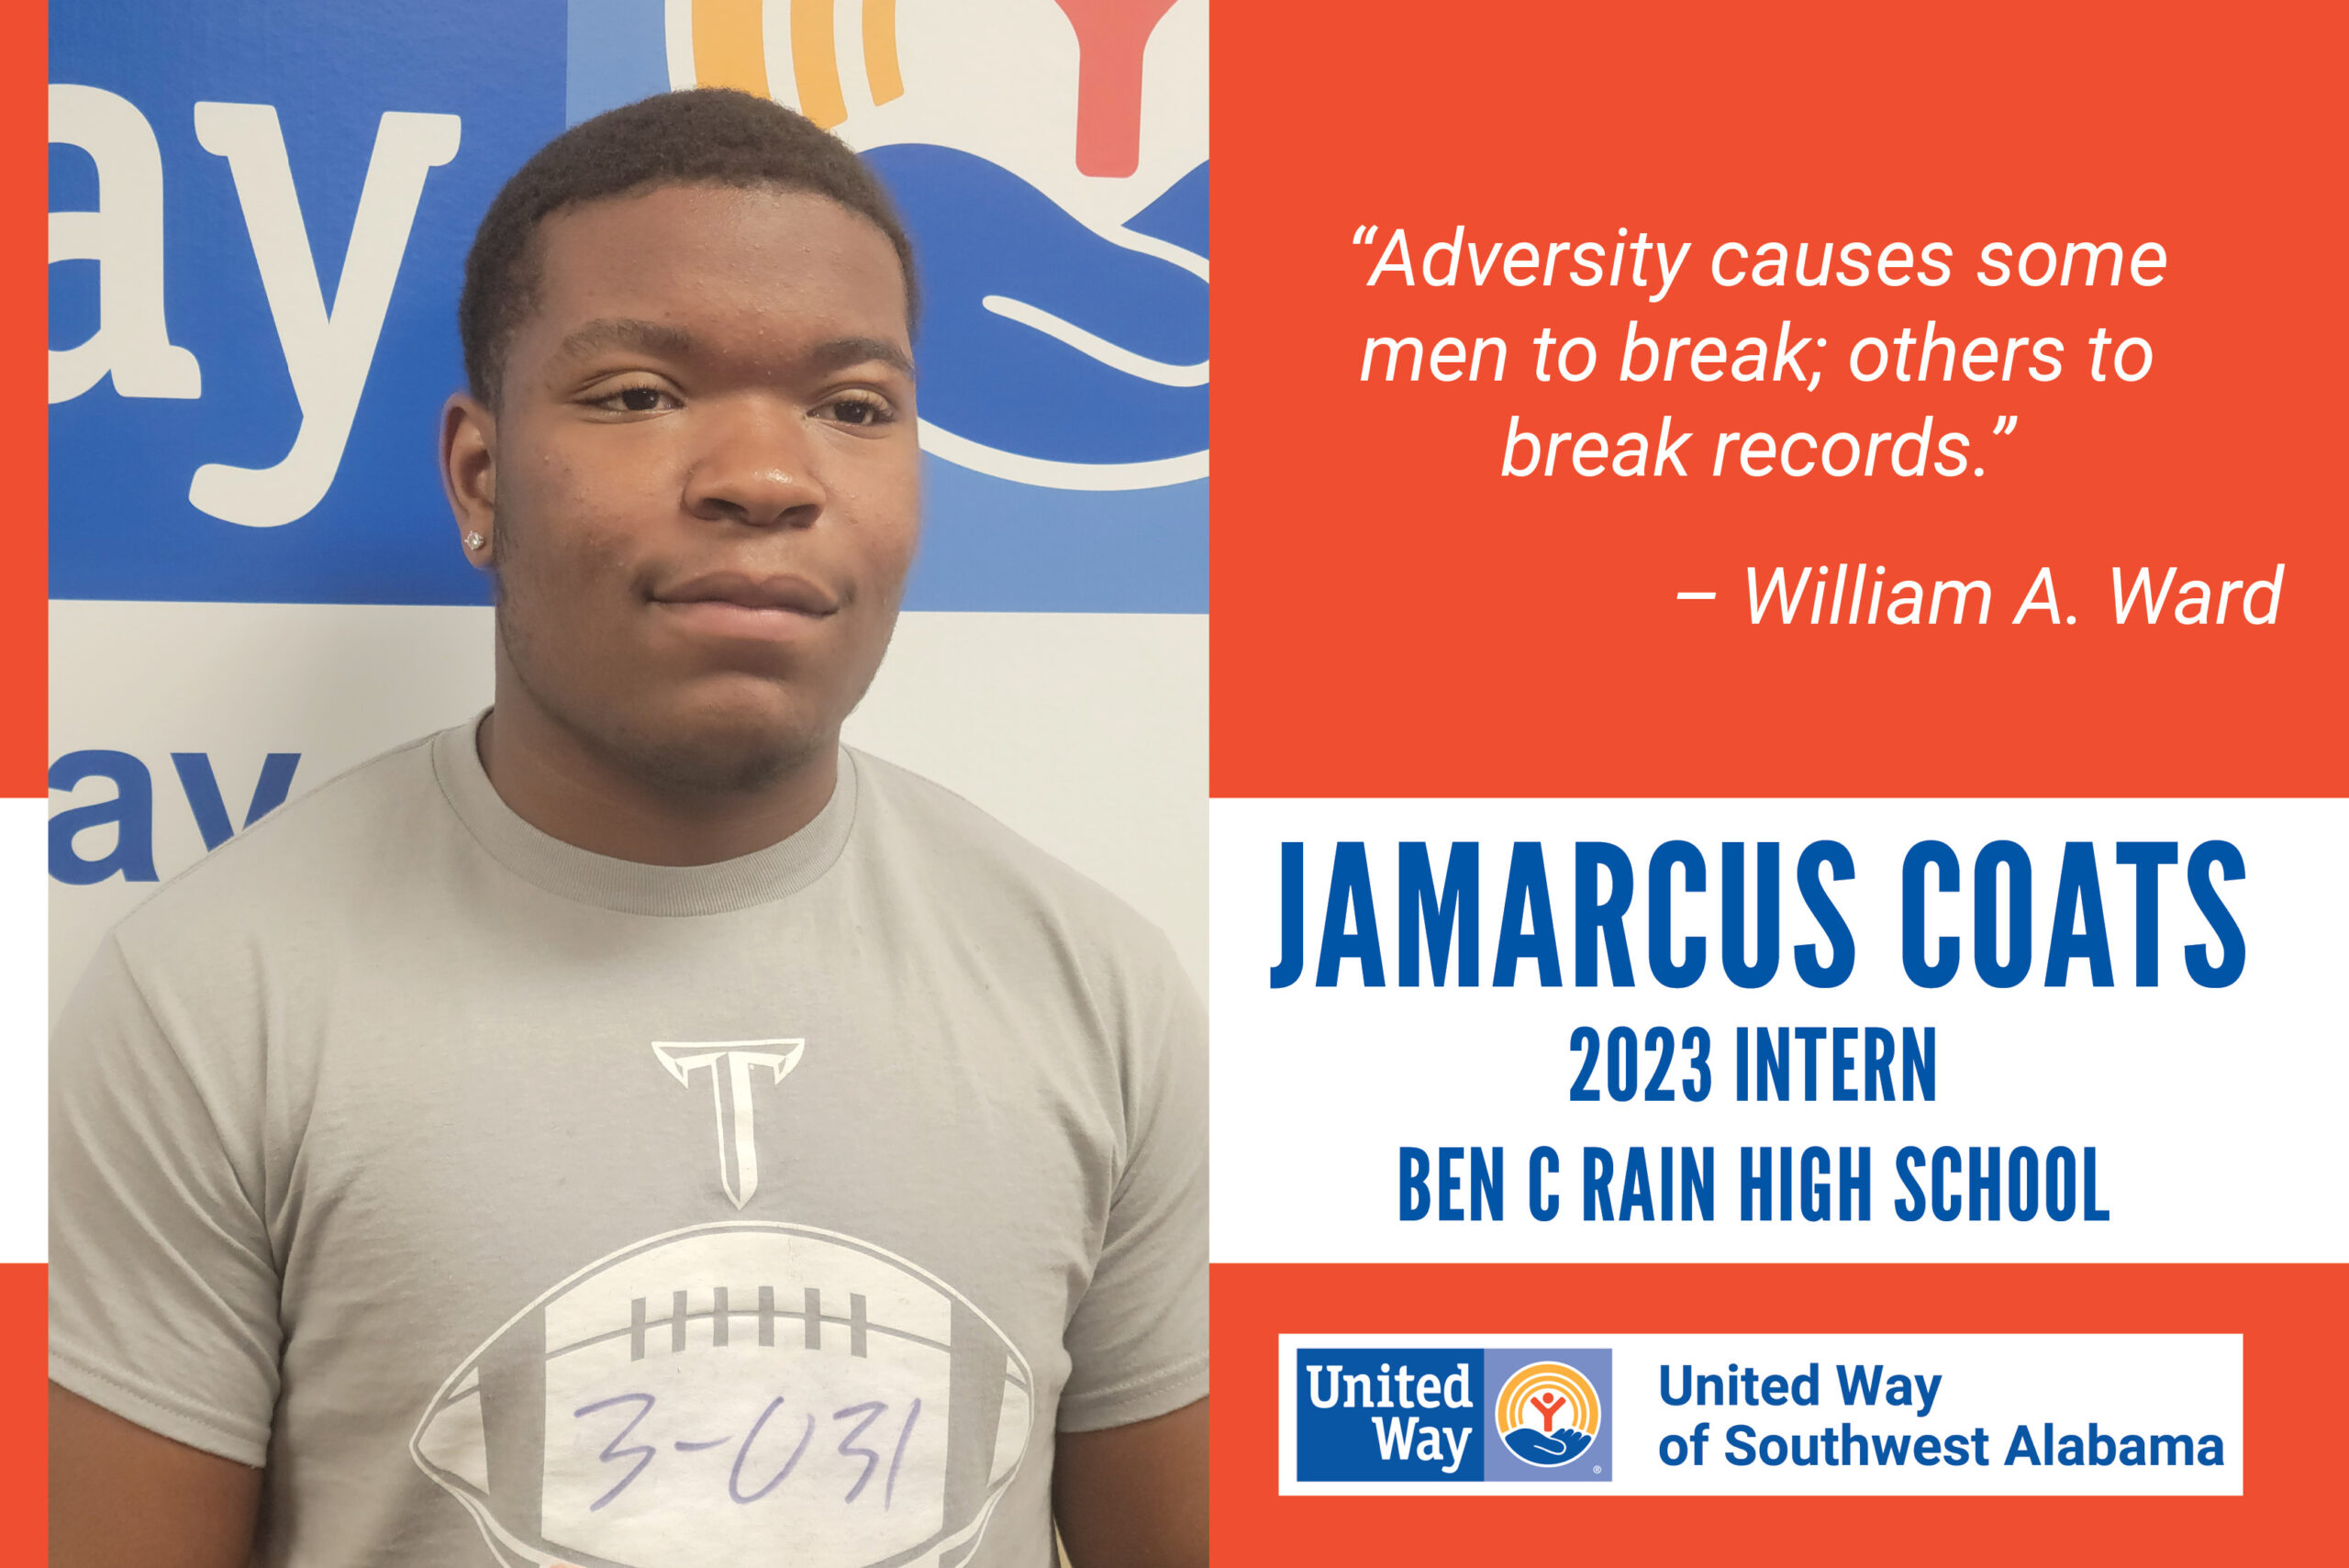 "Adversity causes some men to break; others to break records." William A, Ward JaMarcus Coats, 2023 Intern from Ben C Rain High School